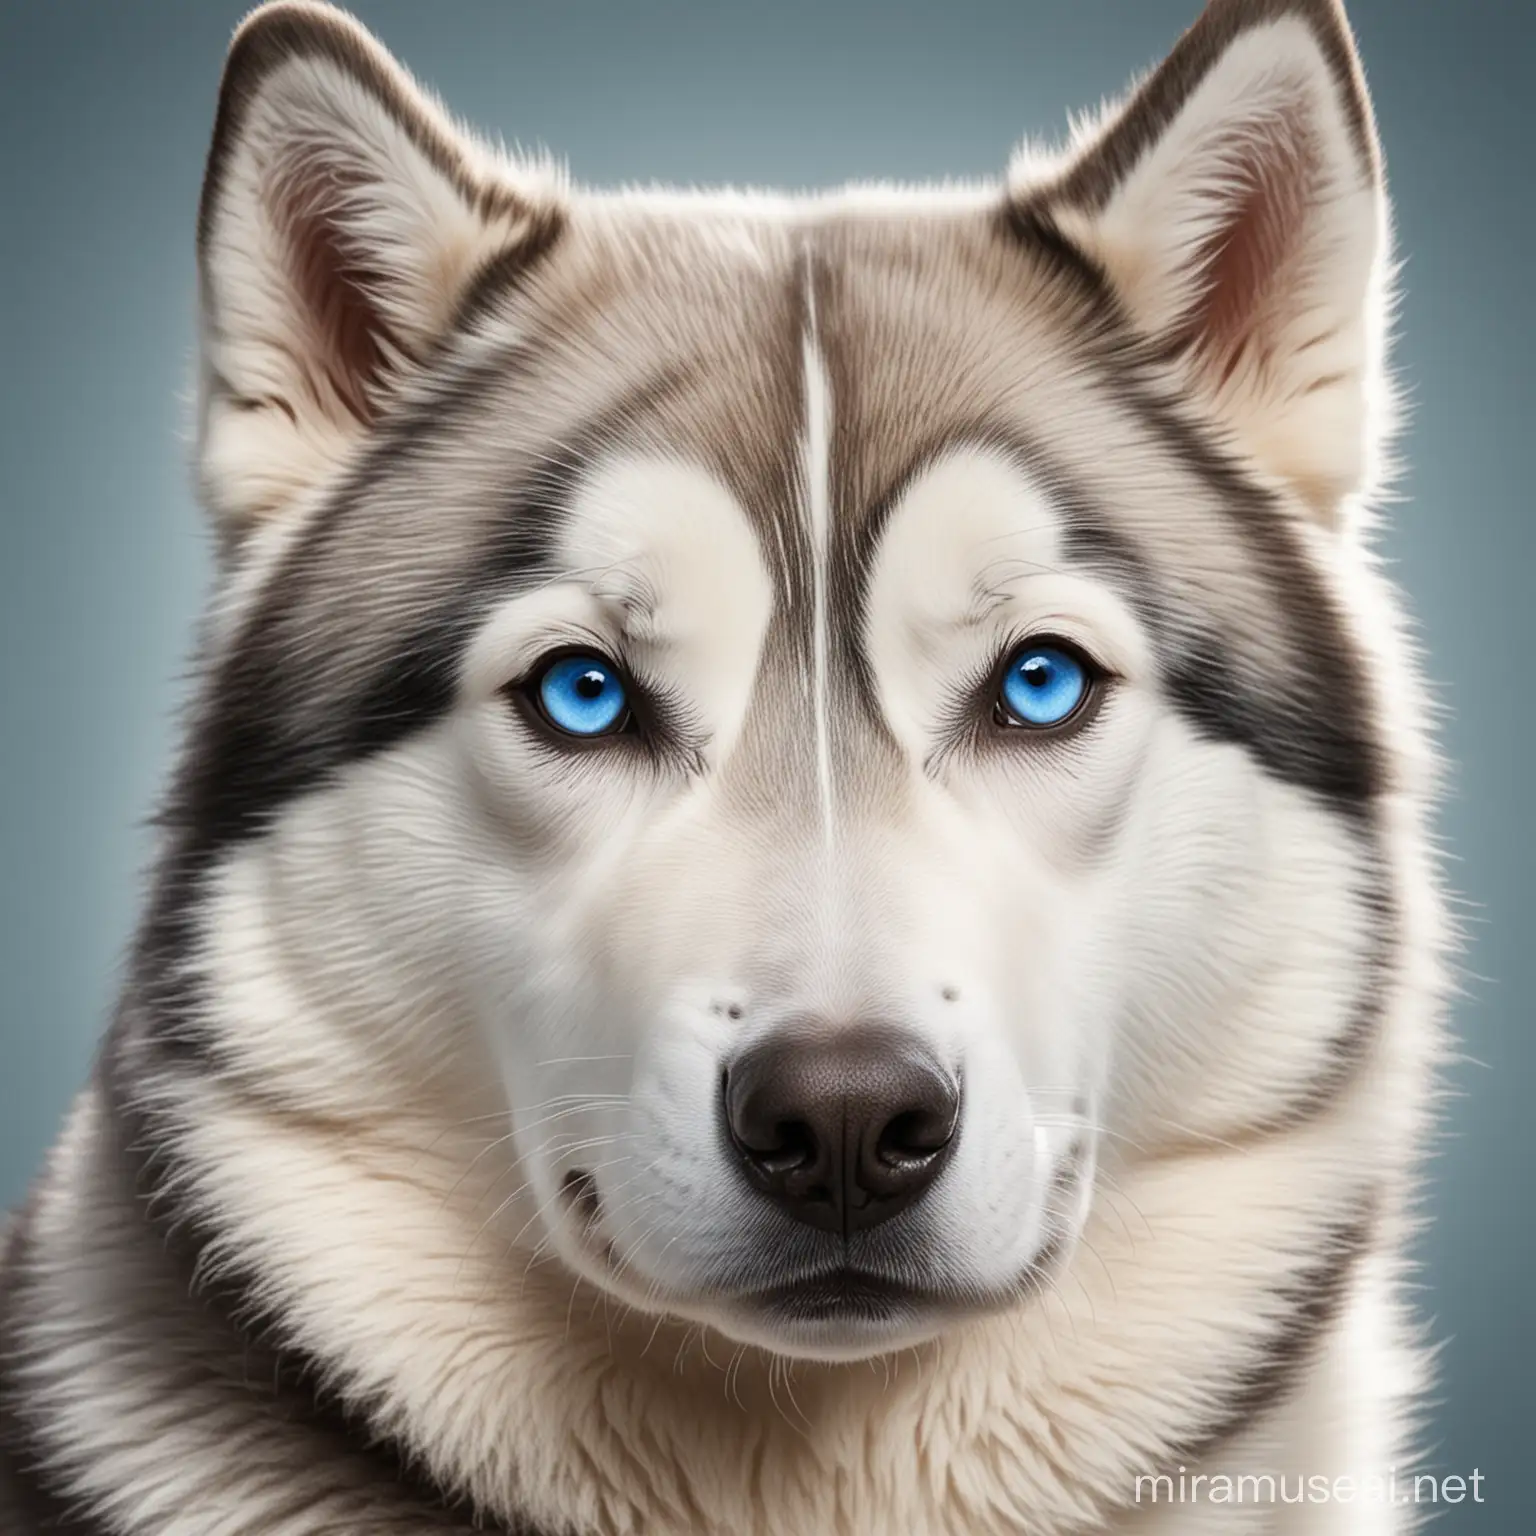 gray husky head with blue eyes illustration